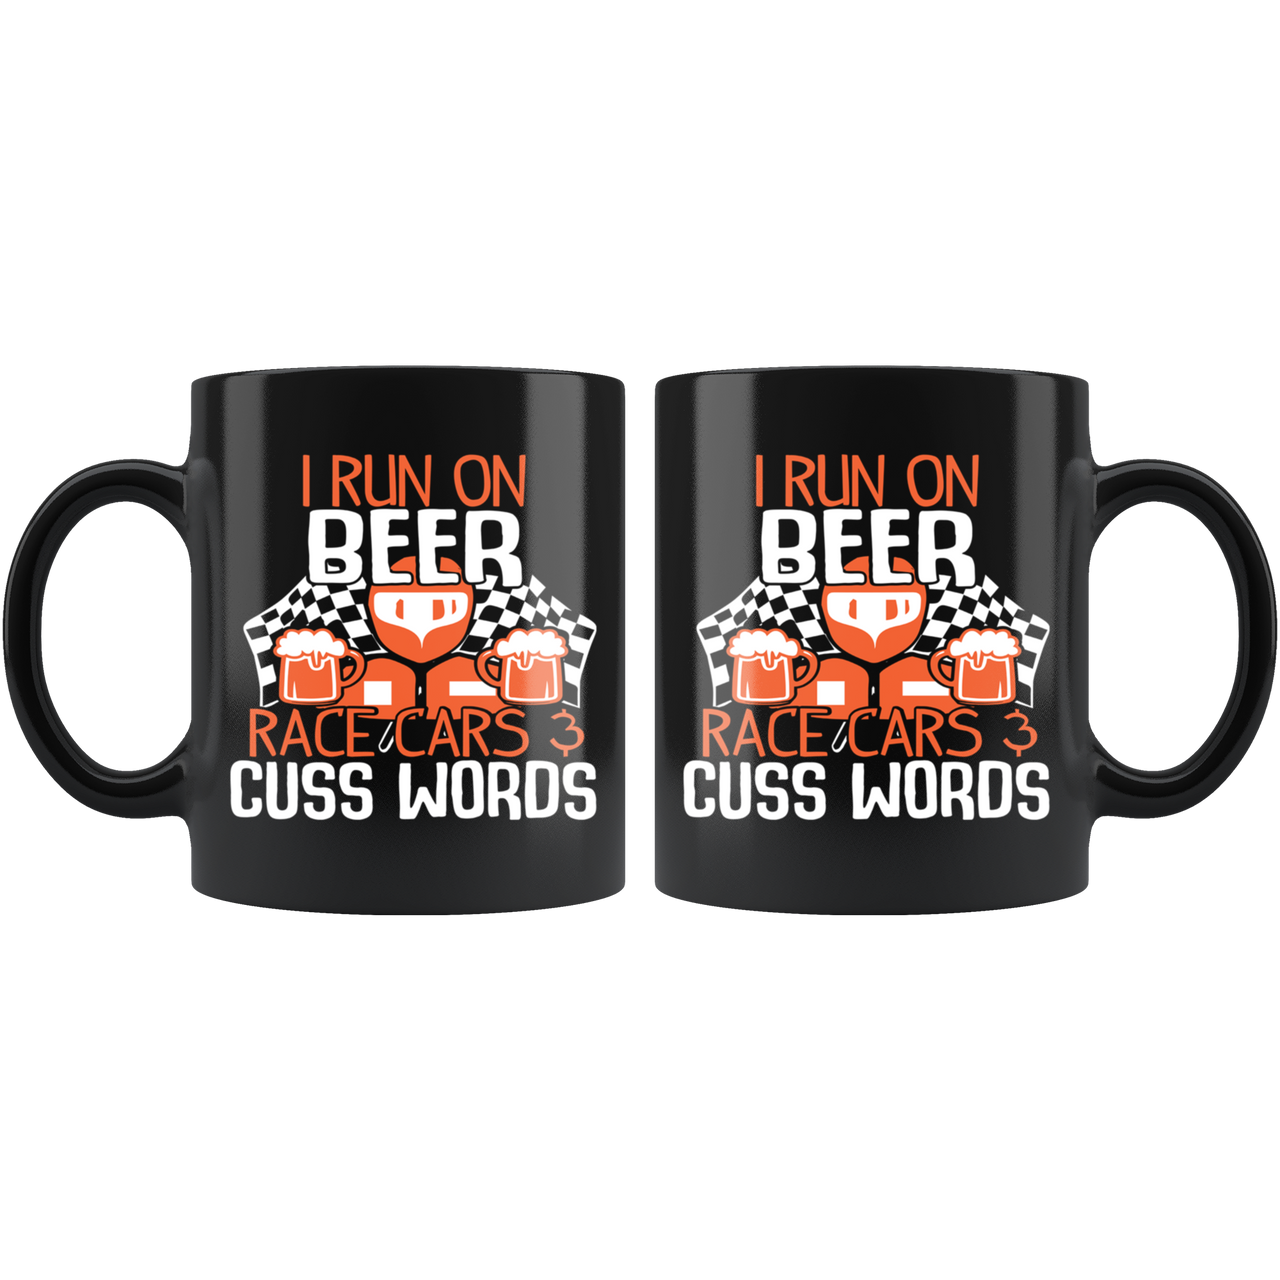 I Run On Beer Race Cars And Cuss Words Mug!